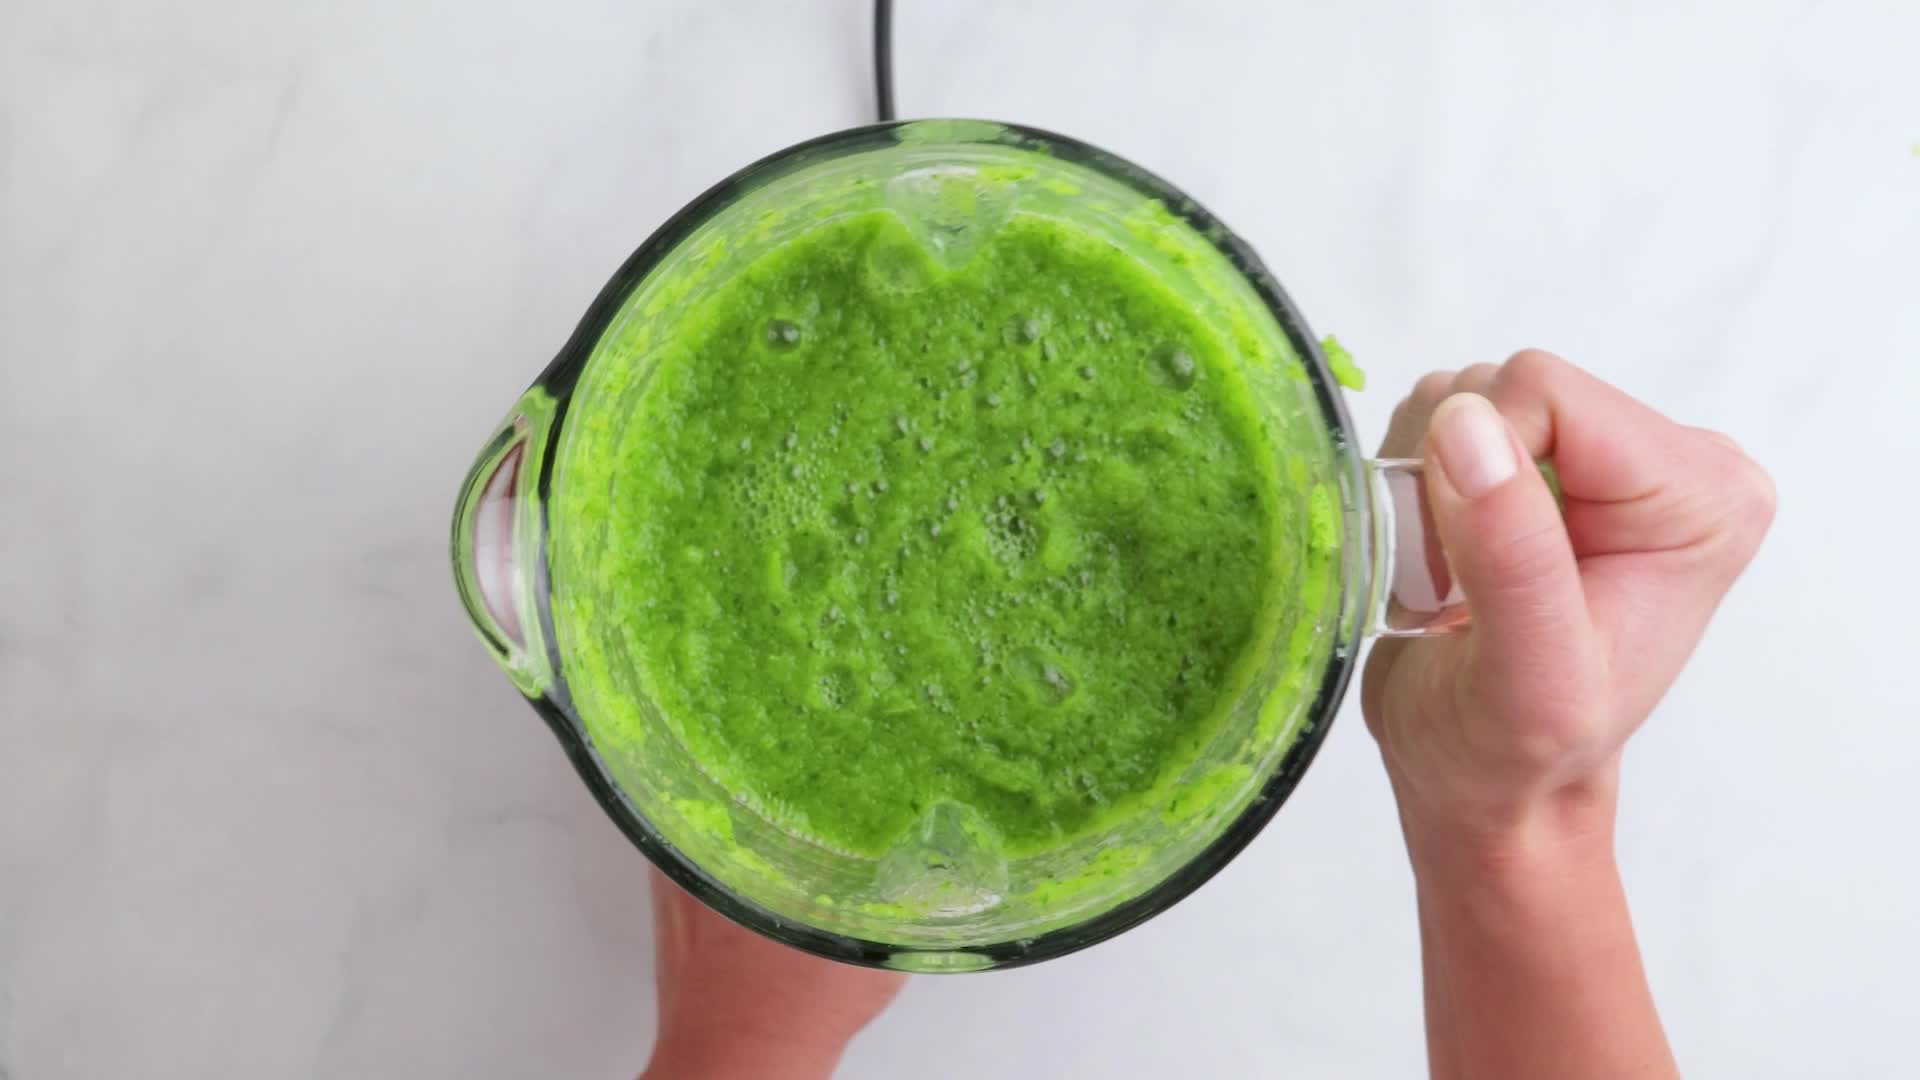 Easy Blender Green Juice Recipe - Cook Eat Well